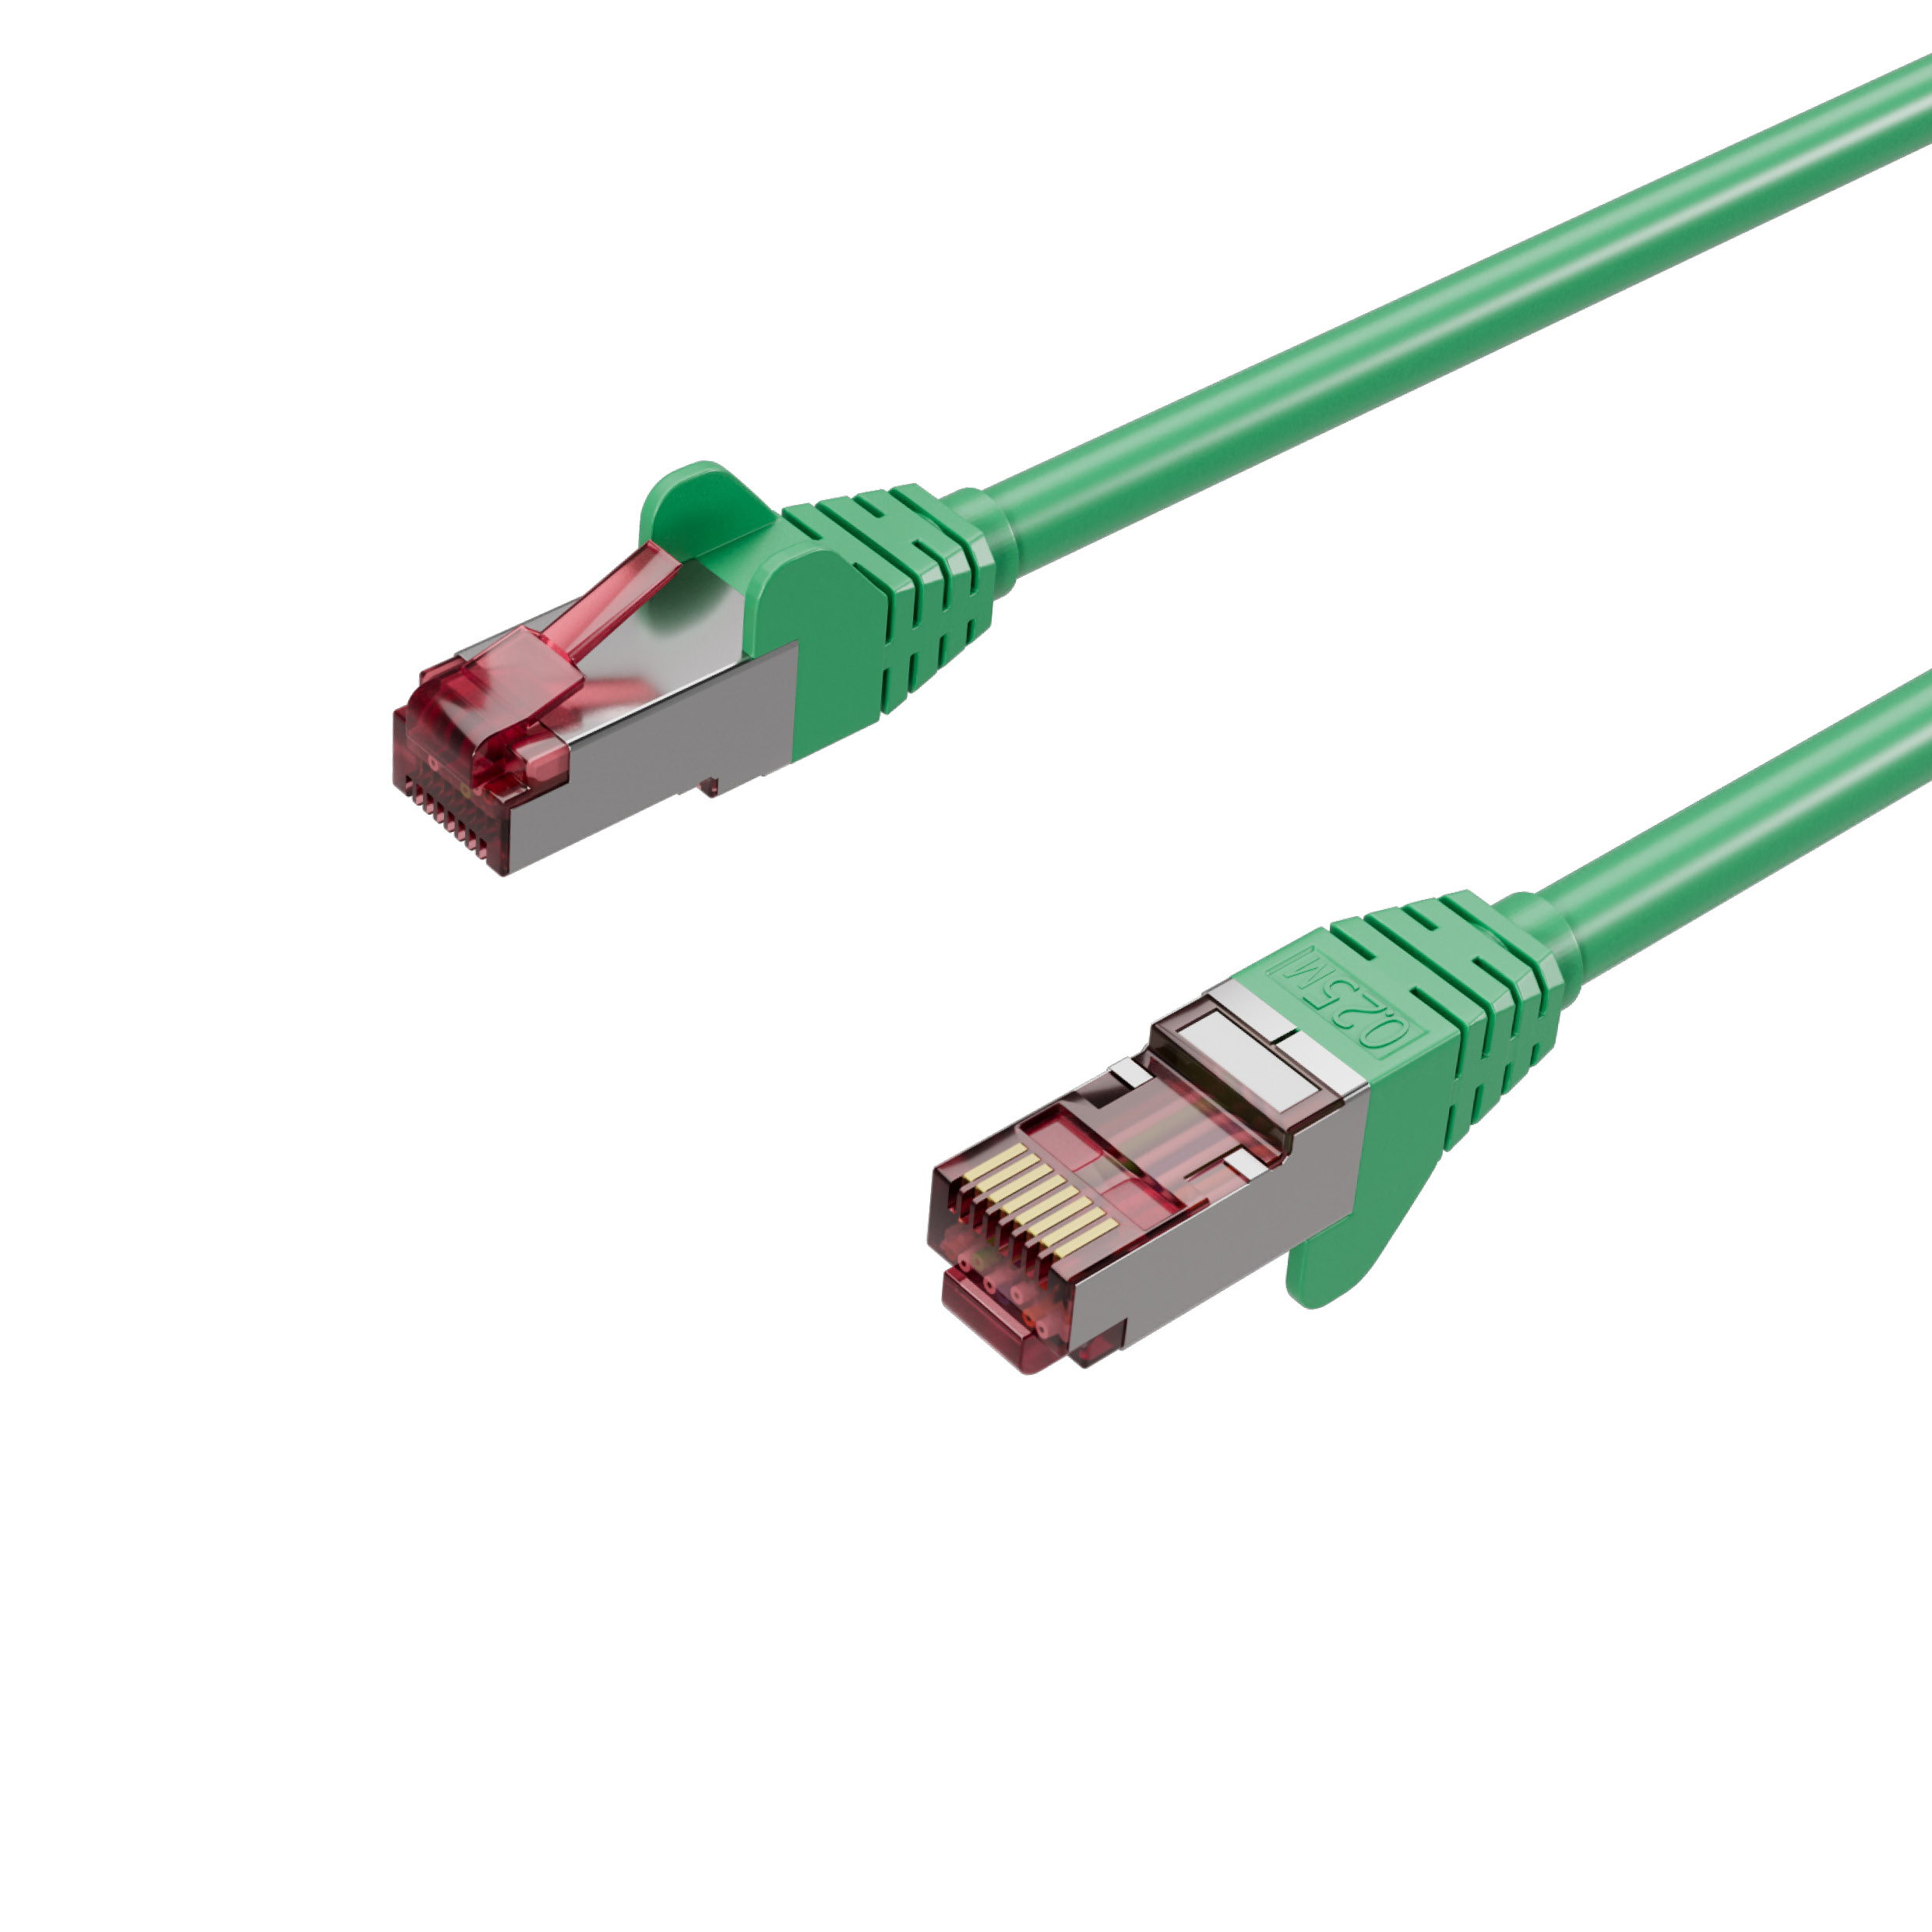 KABELBUDE Netzwerkkabel, RJ45 LAN, Ethernet 30 GHMT Halogenfrei, 6A, Patchkabel S/FTP, 30,00m, m PIMF, RJ45, Cat Grün